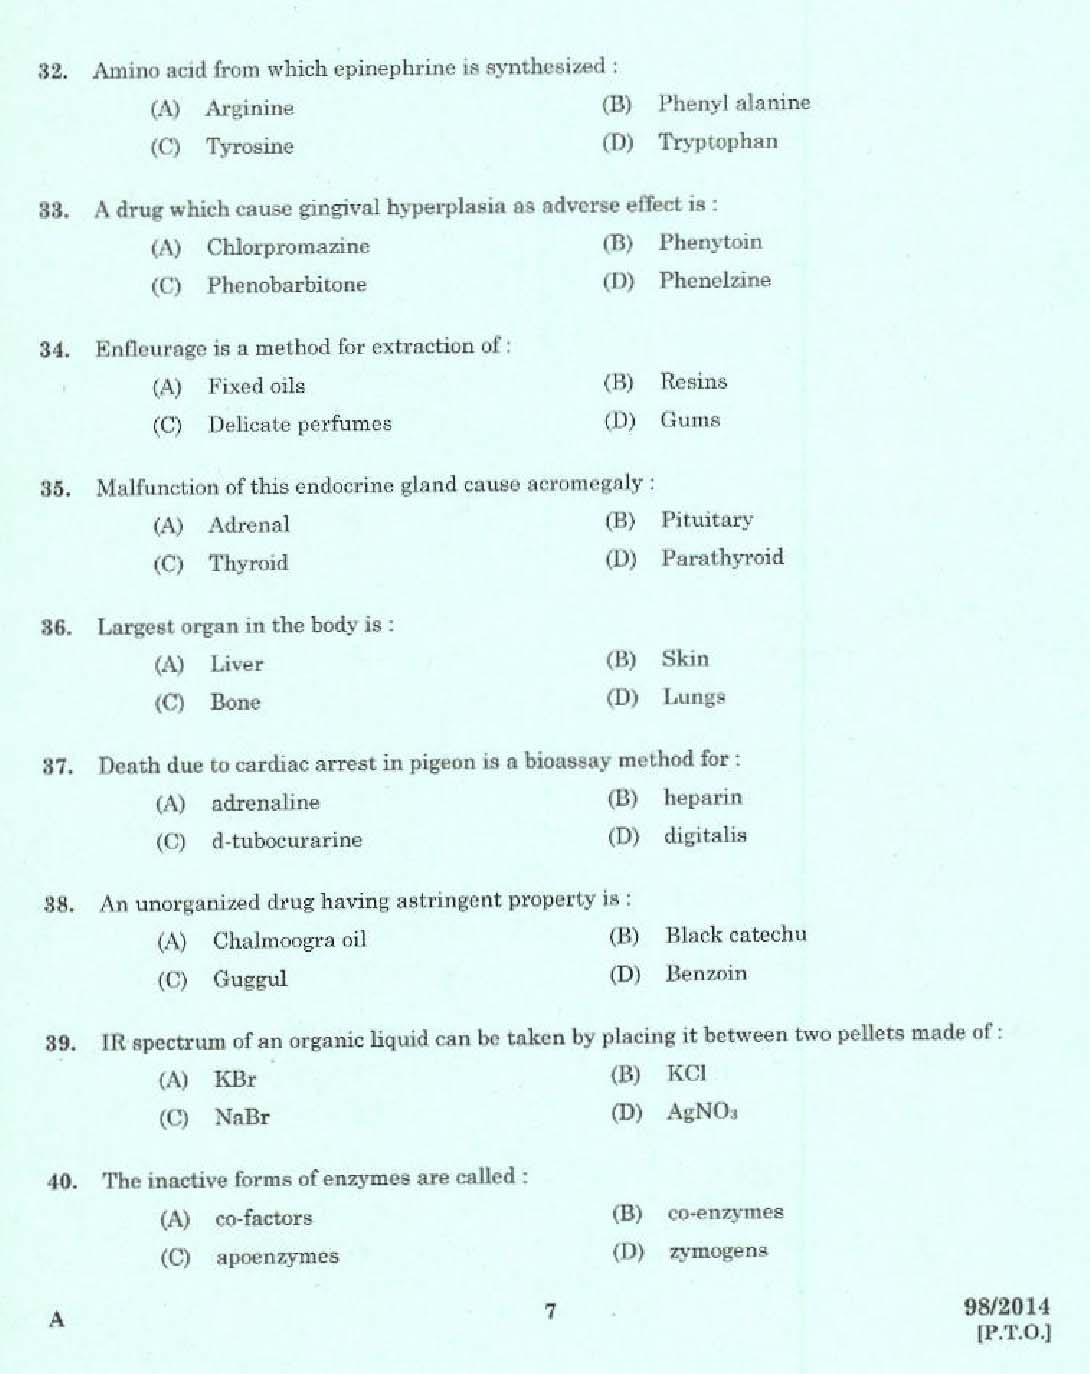 Kerala PSC Pharma Chemist Exam Code 982014 5